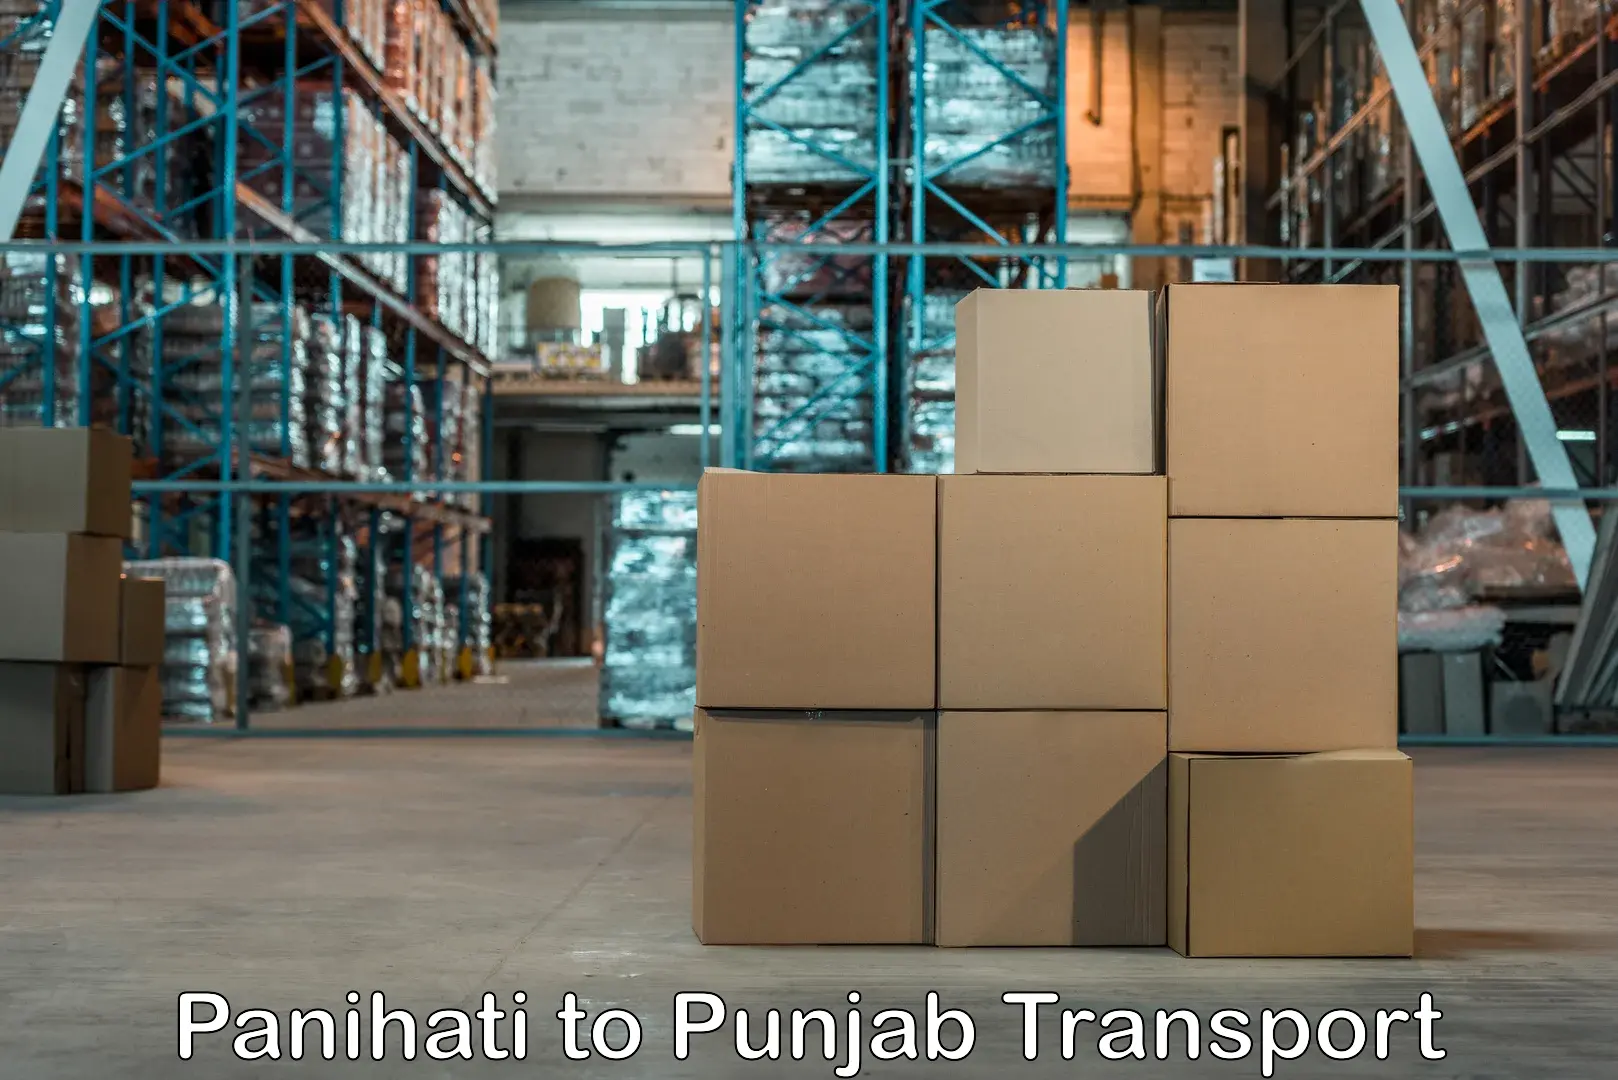 Transport in sharing in Panihati to Punjab